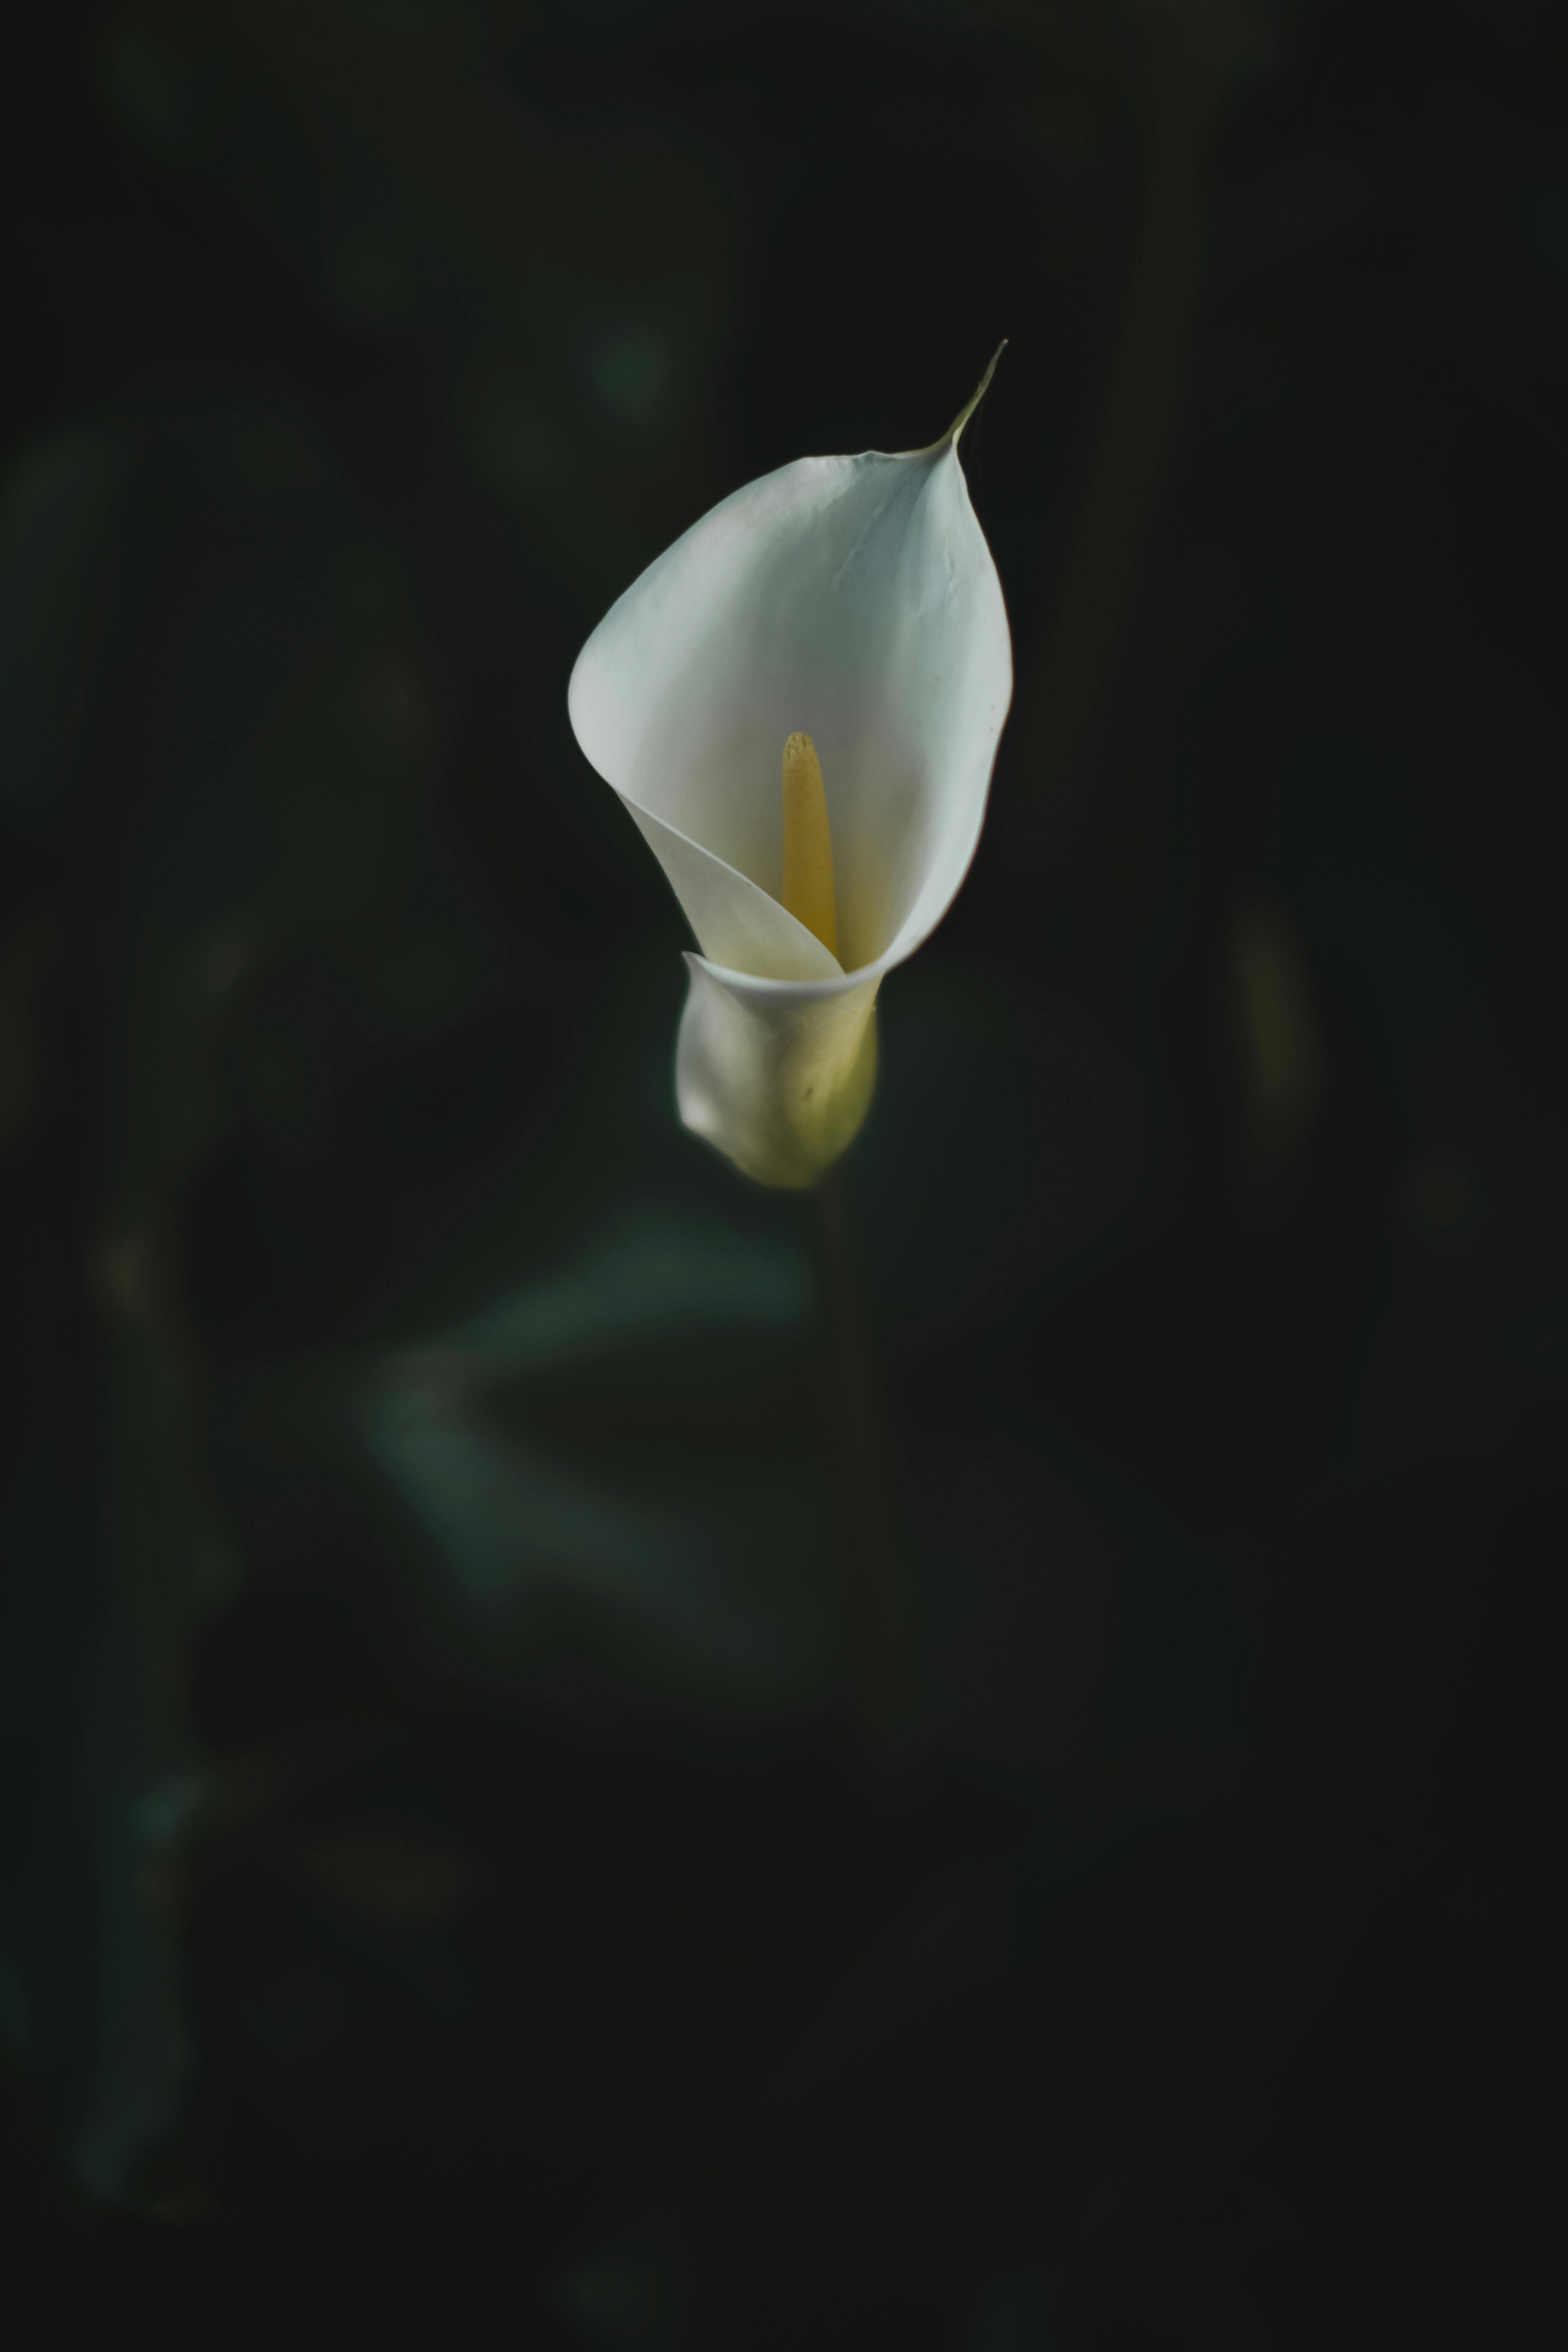 White Flower in Black Background · Free Stock Photo